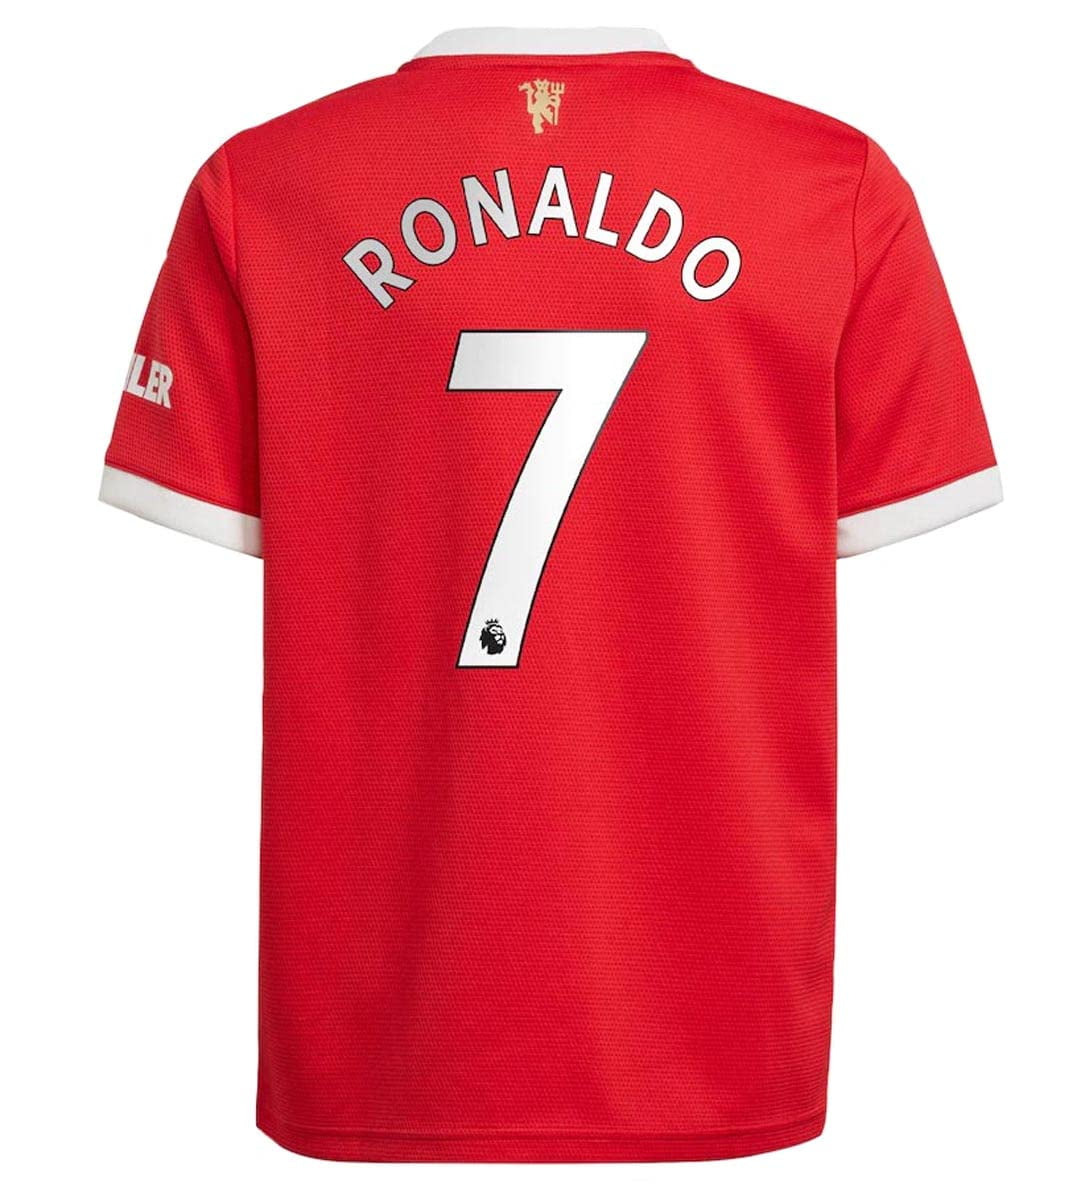 2021/22 Ronaldo #7 Man United Home Men's Soccer Jersey 